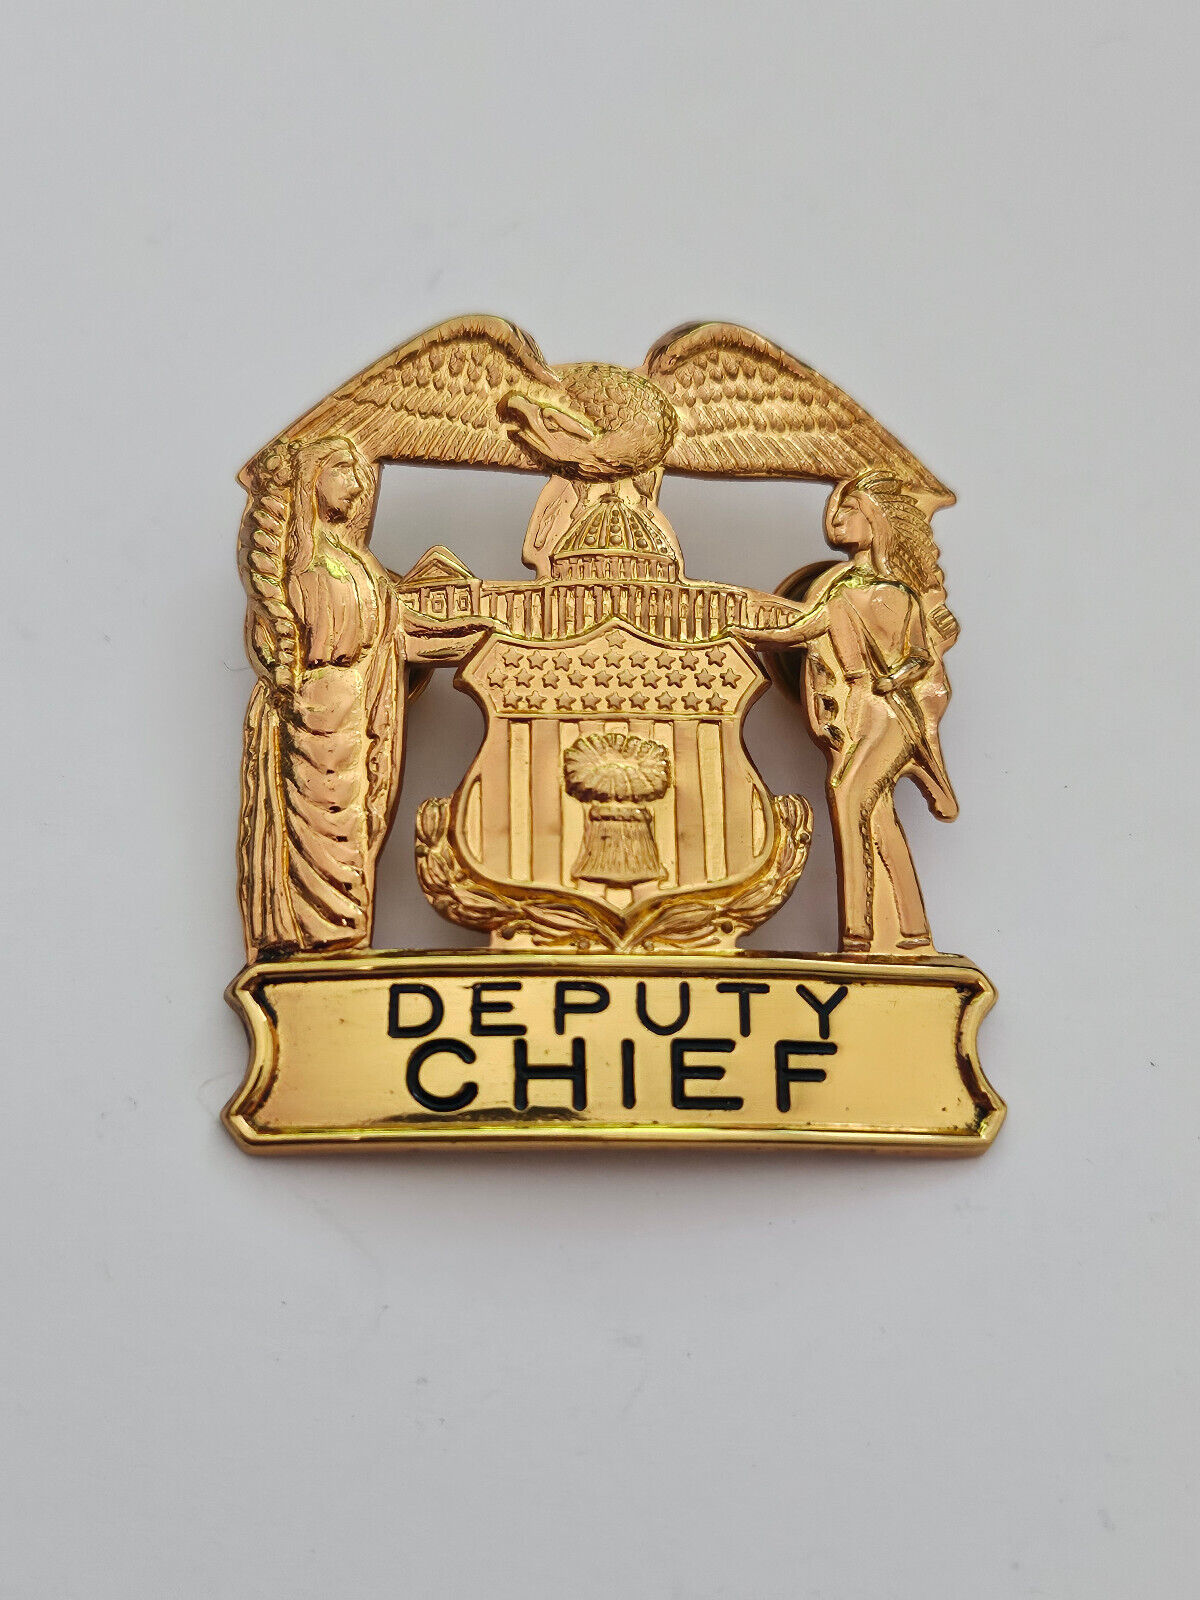 Vintage Illinois Deputy Chief hat badge, Vintage Deputy Chief badge